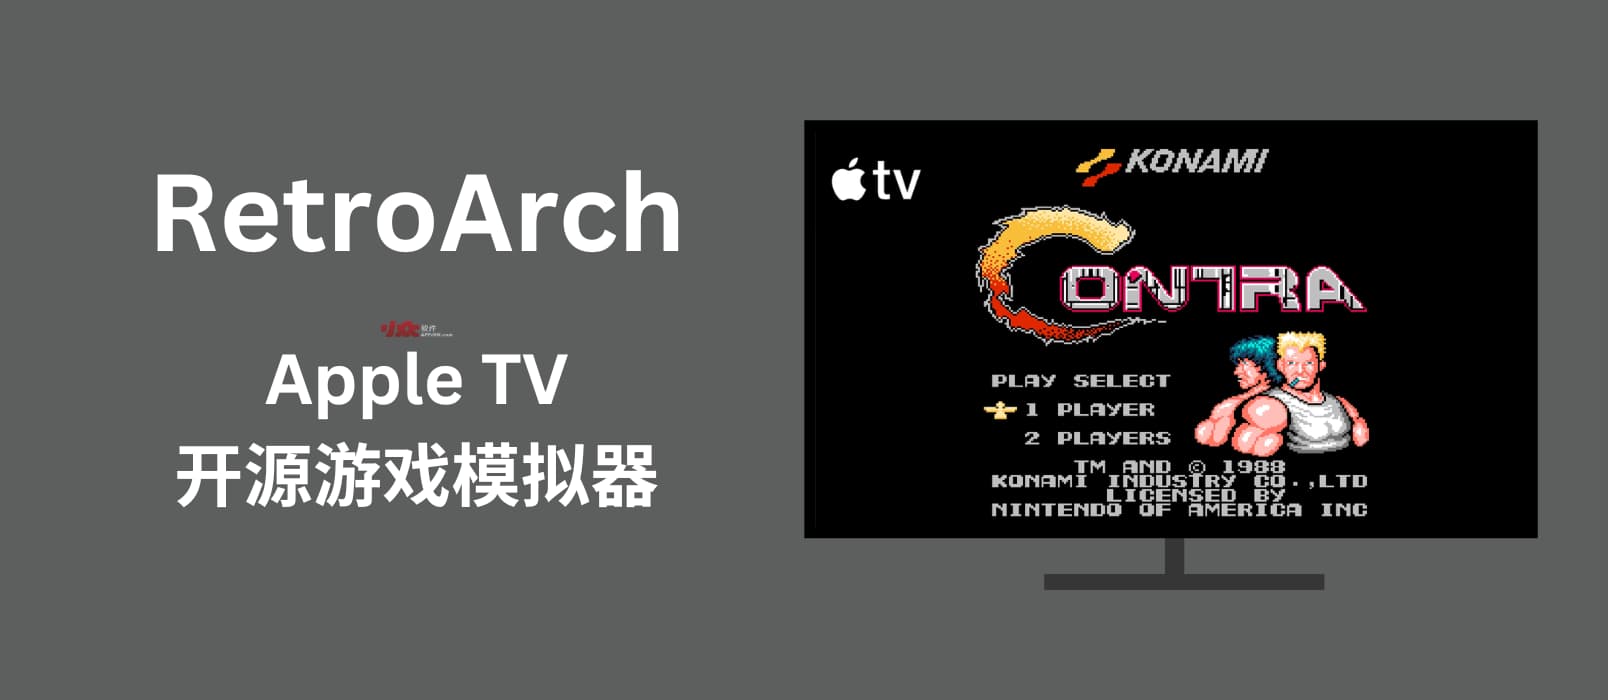 RetroArch - 可在 Apple TV 上使用的开源游戏模拟器